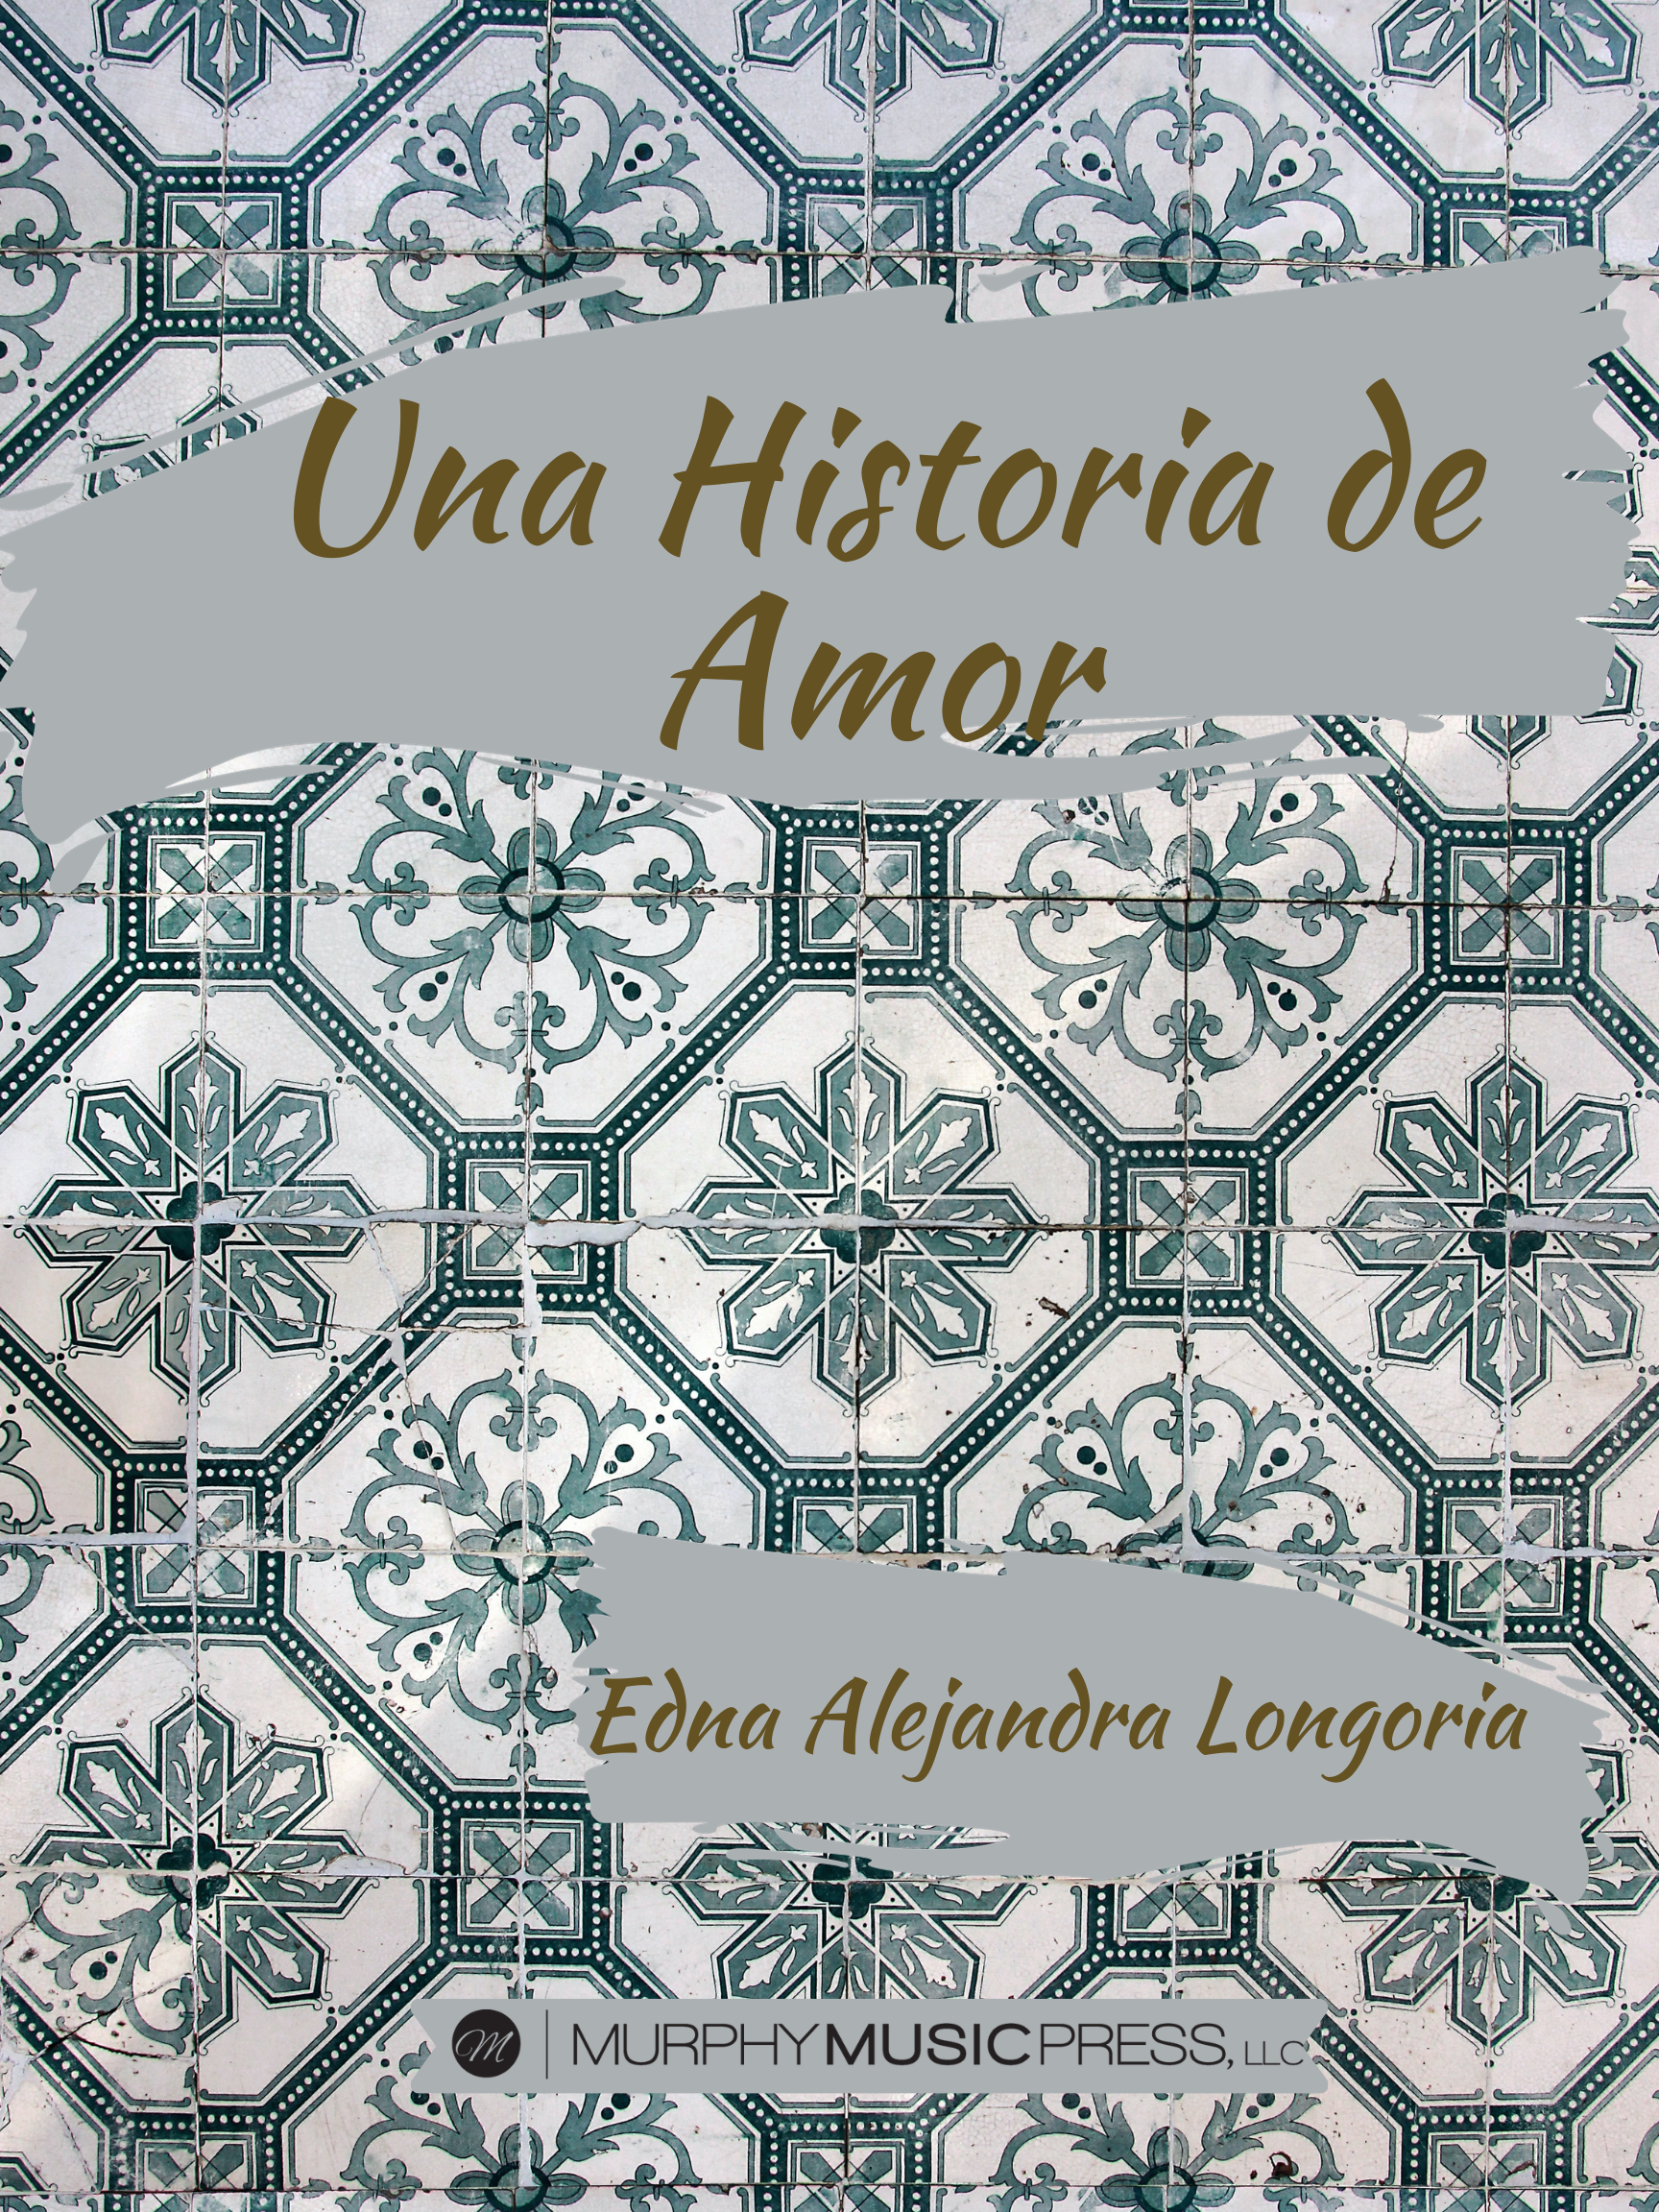 Una Historia De Amor by Edna Alejandra Longoria